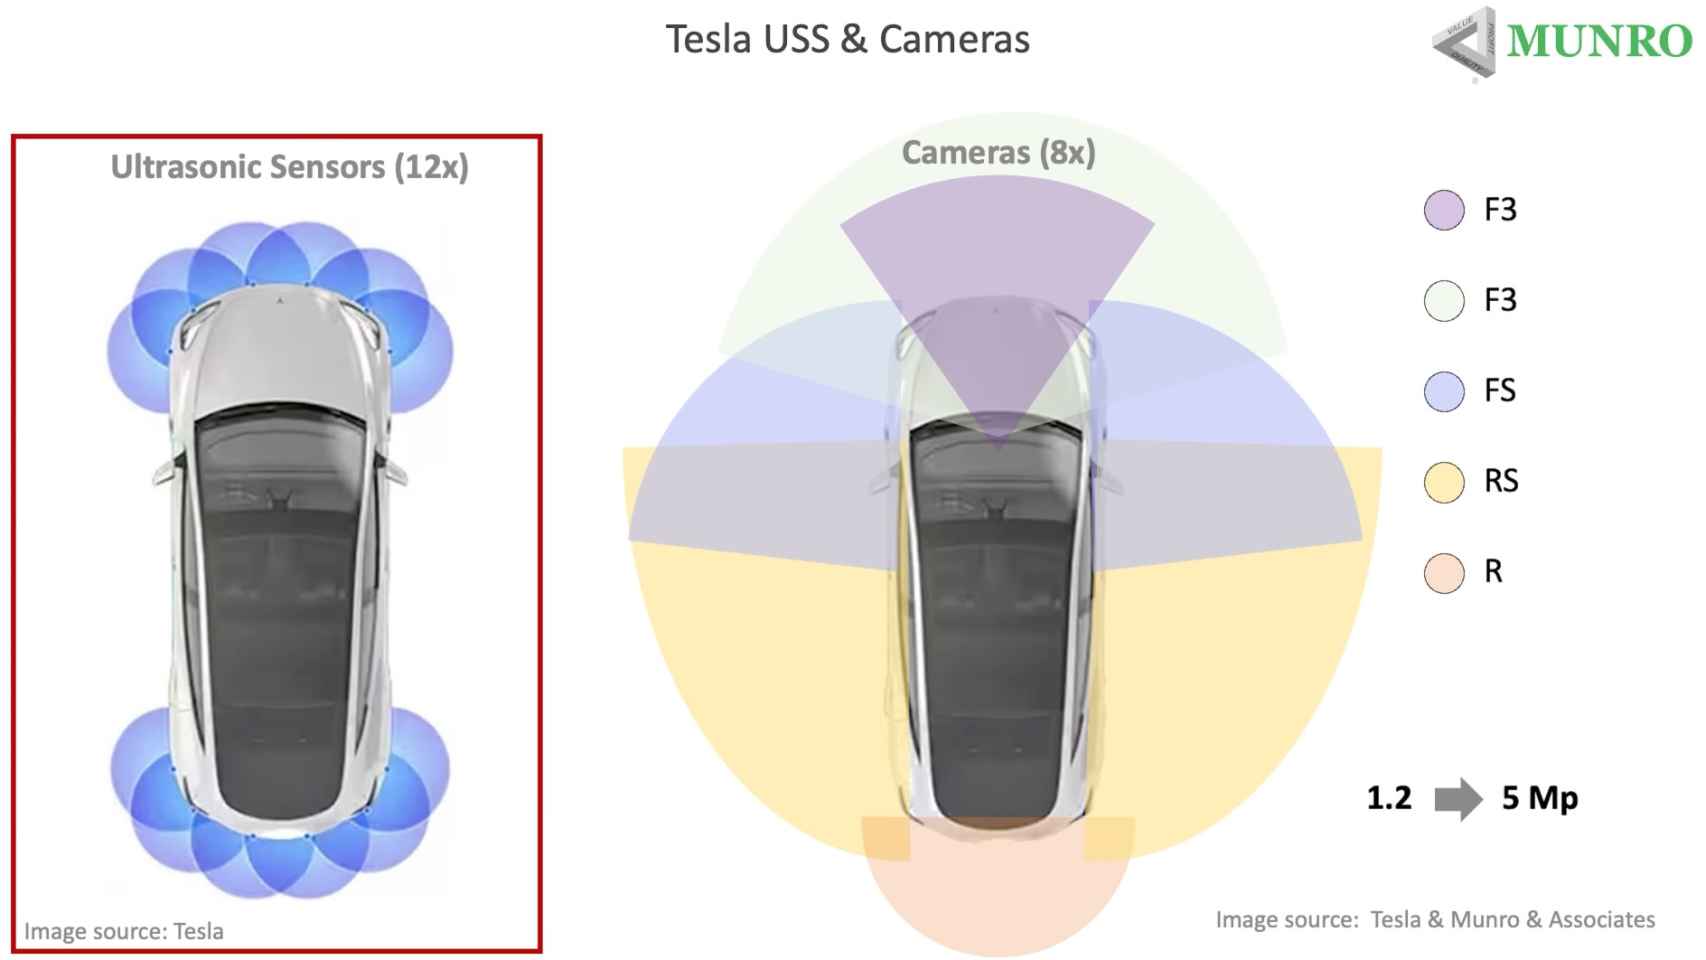 Comparison of Tesla Vision ultrasonic sensors and cameras